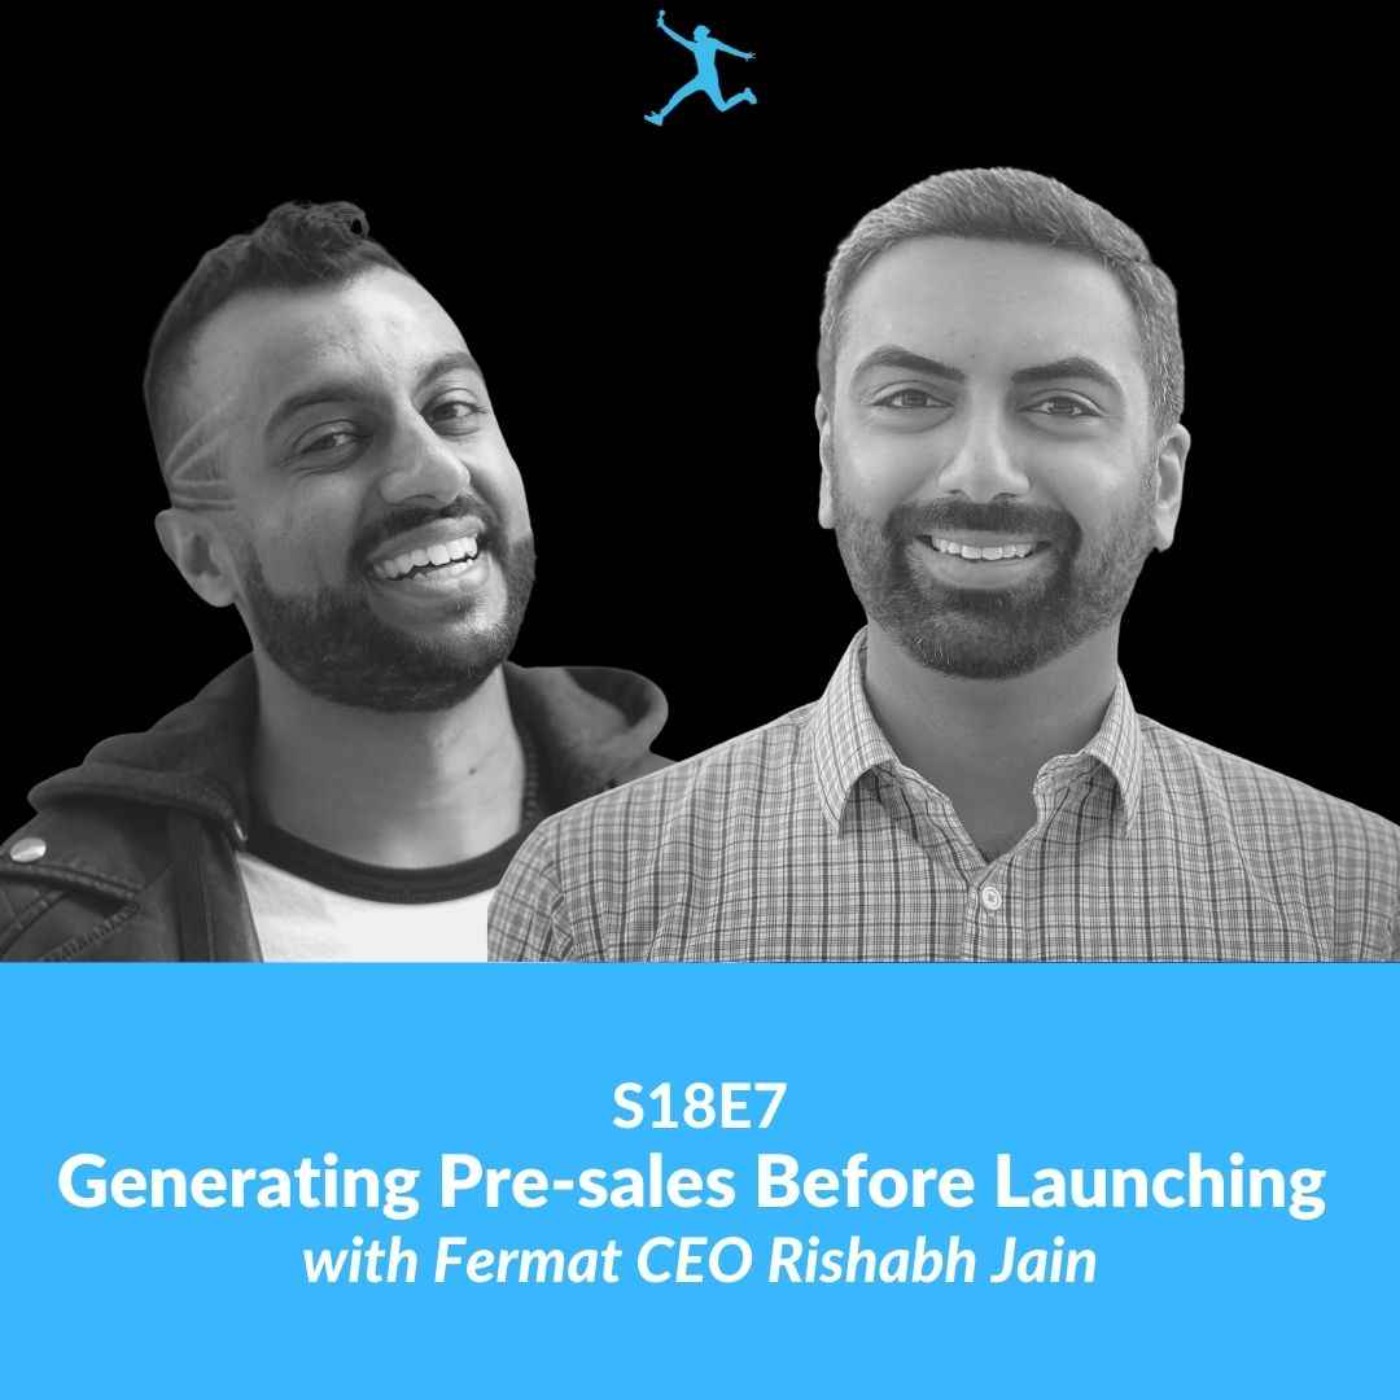 S18E7: Generating Pre-sales Before Launching with Fermat CEO Rishabh Jain